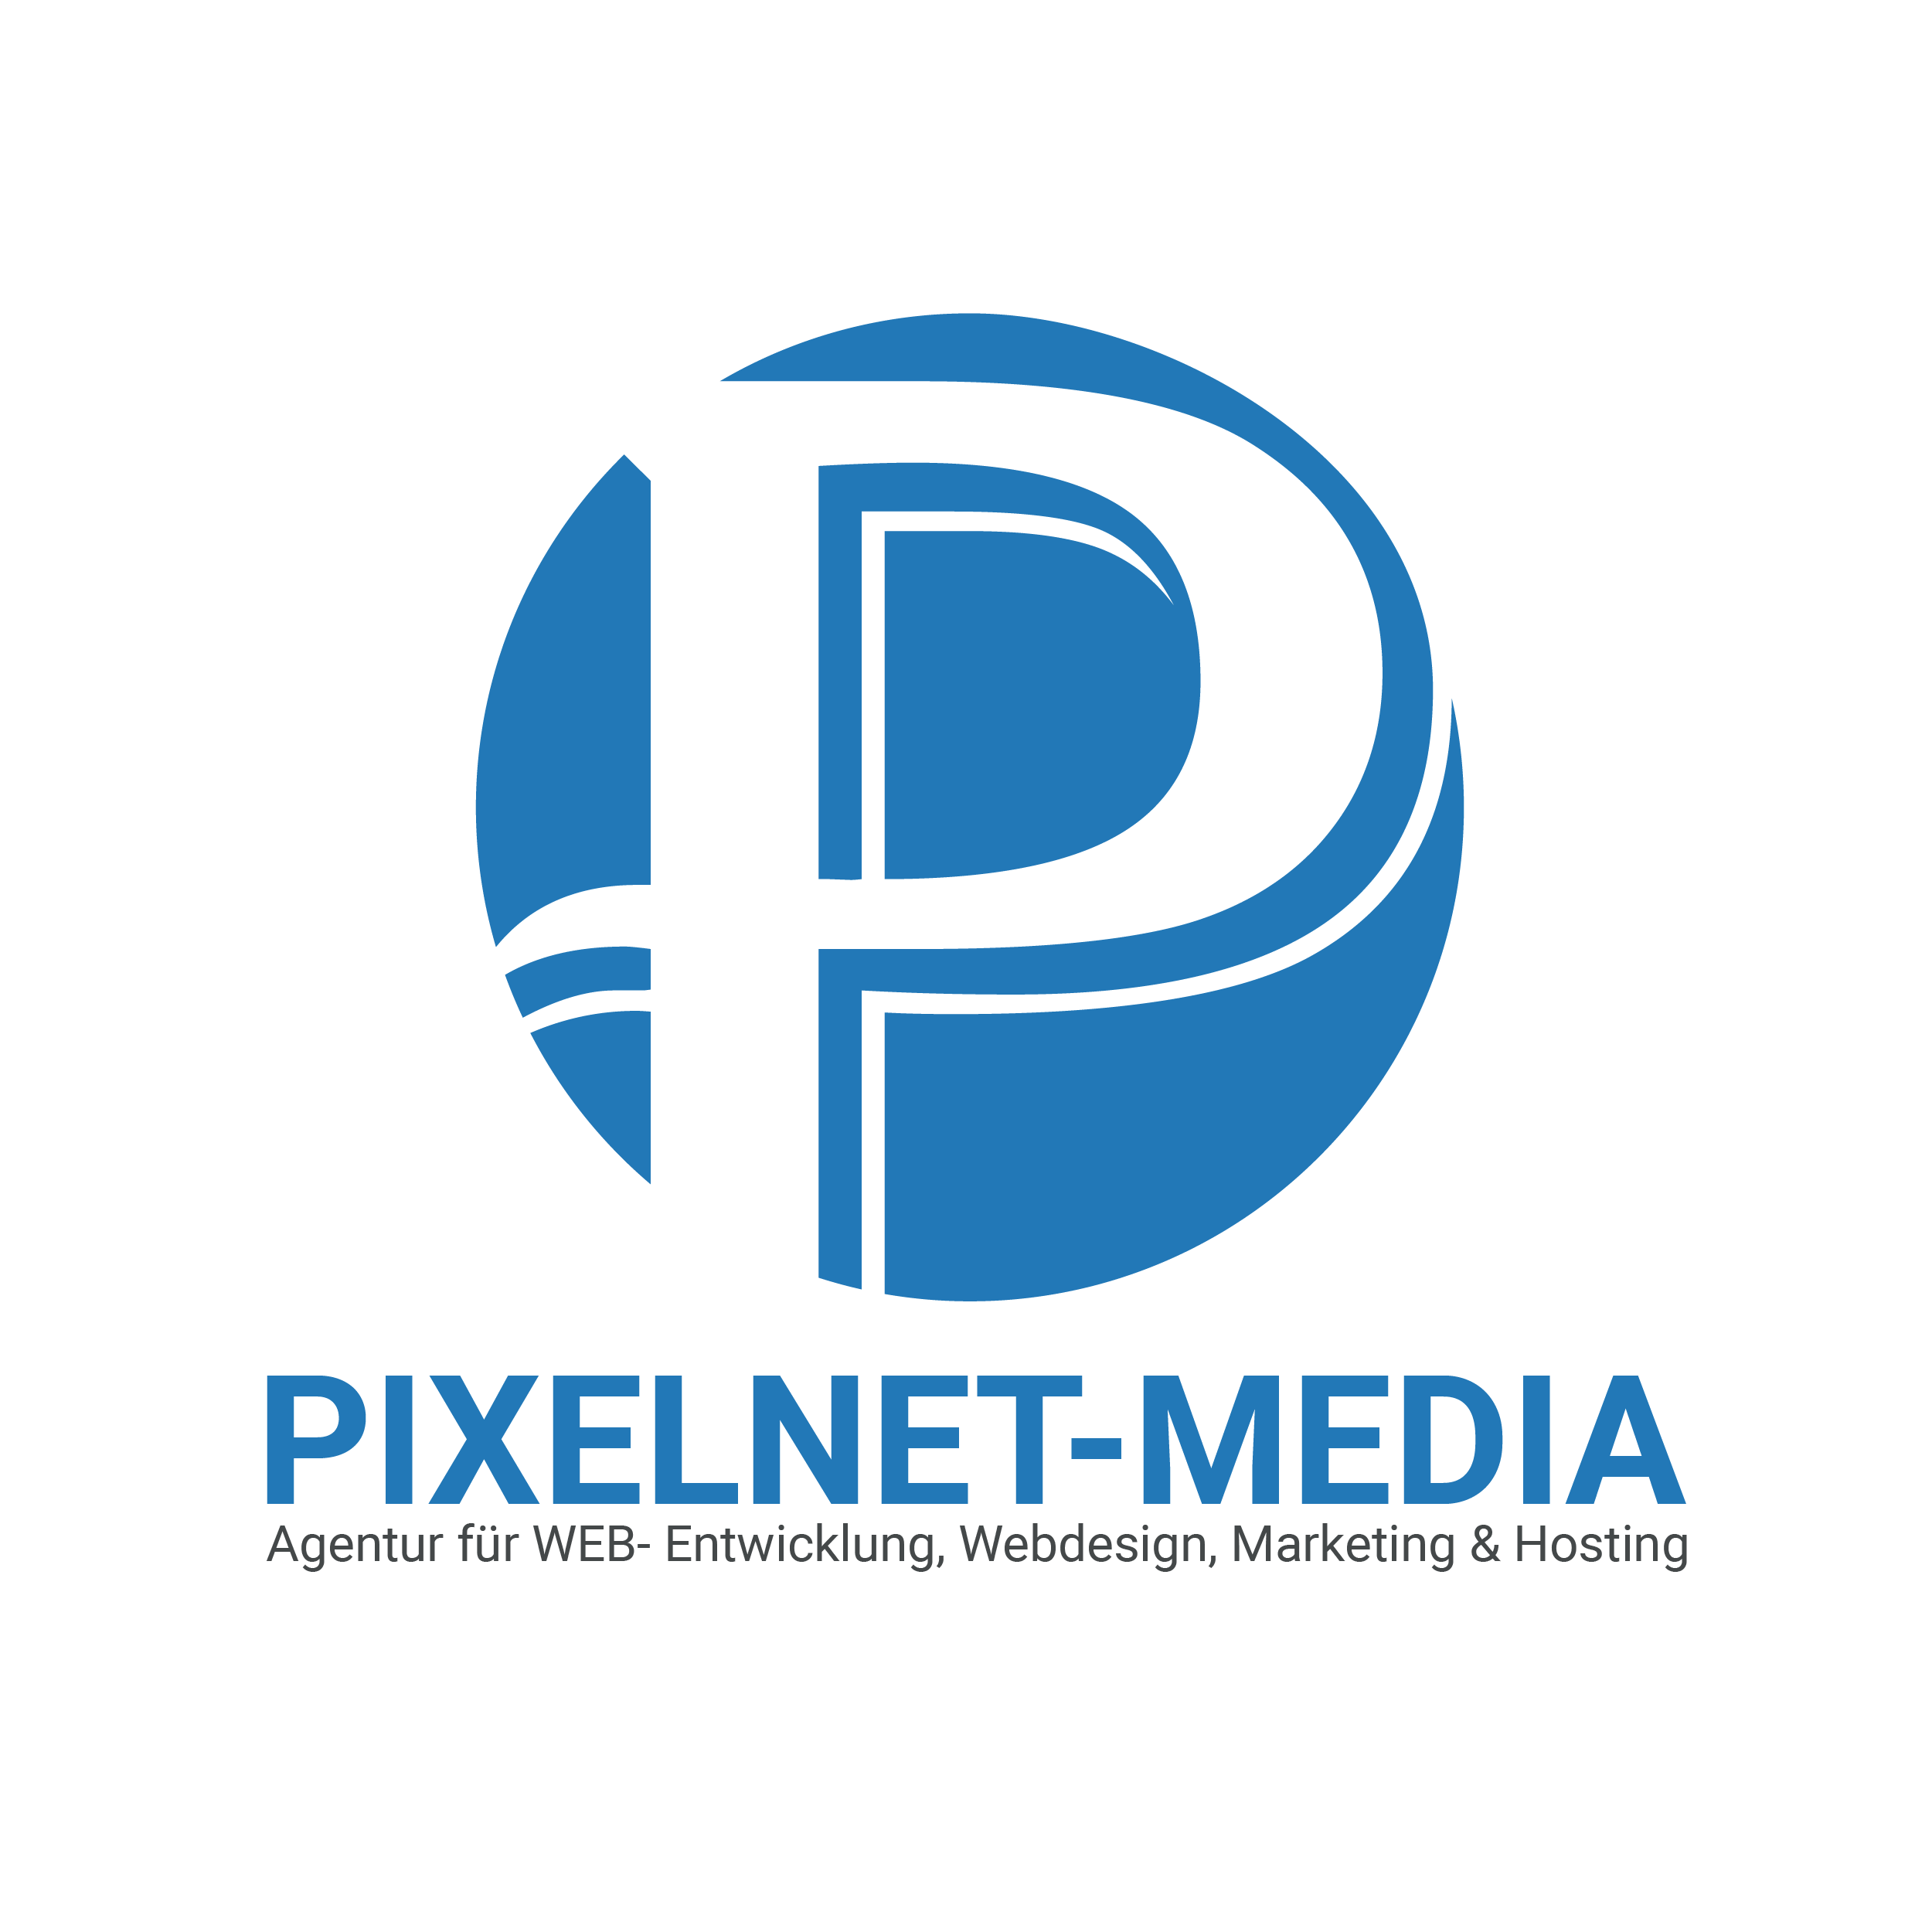 (c) Pixelnet-media.com